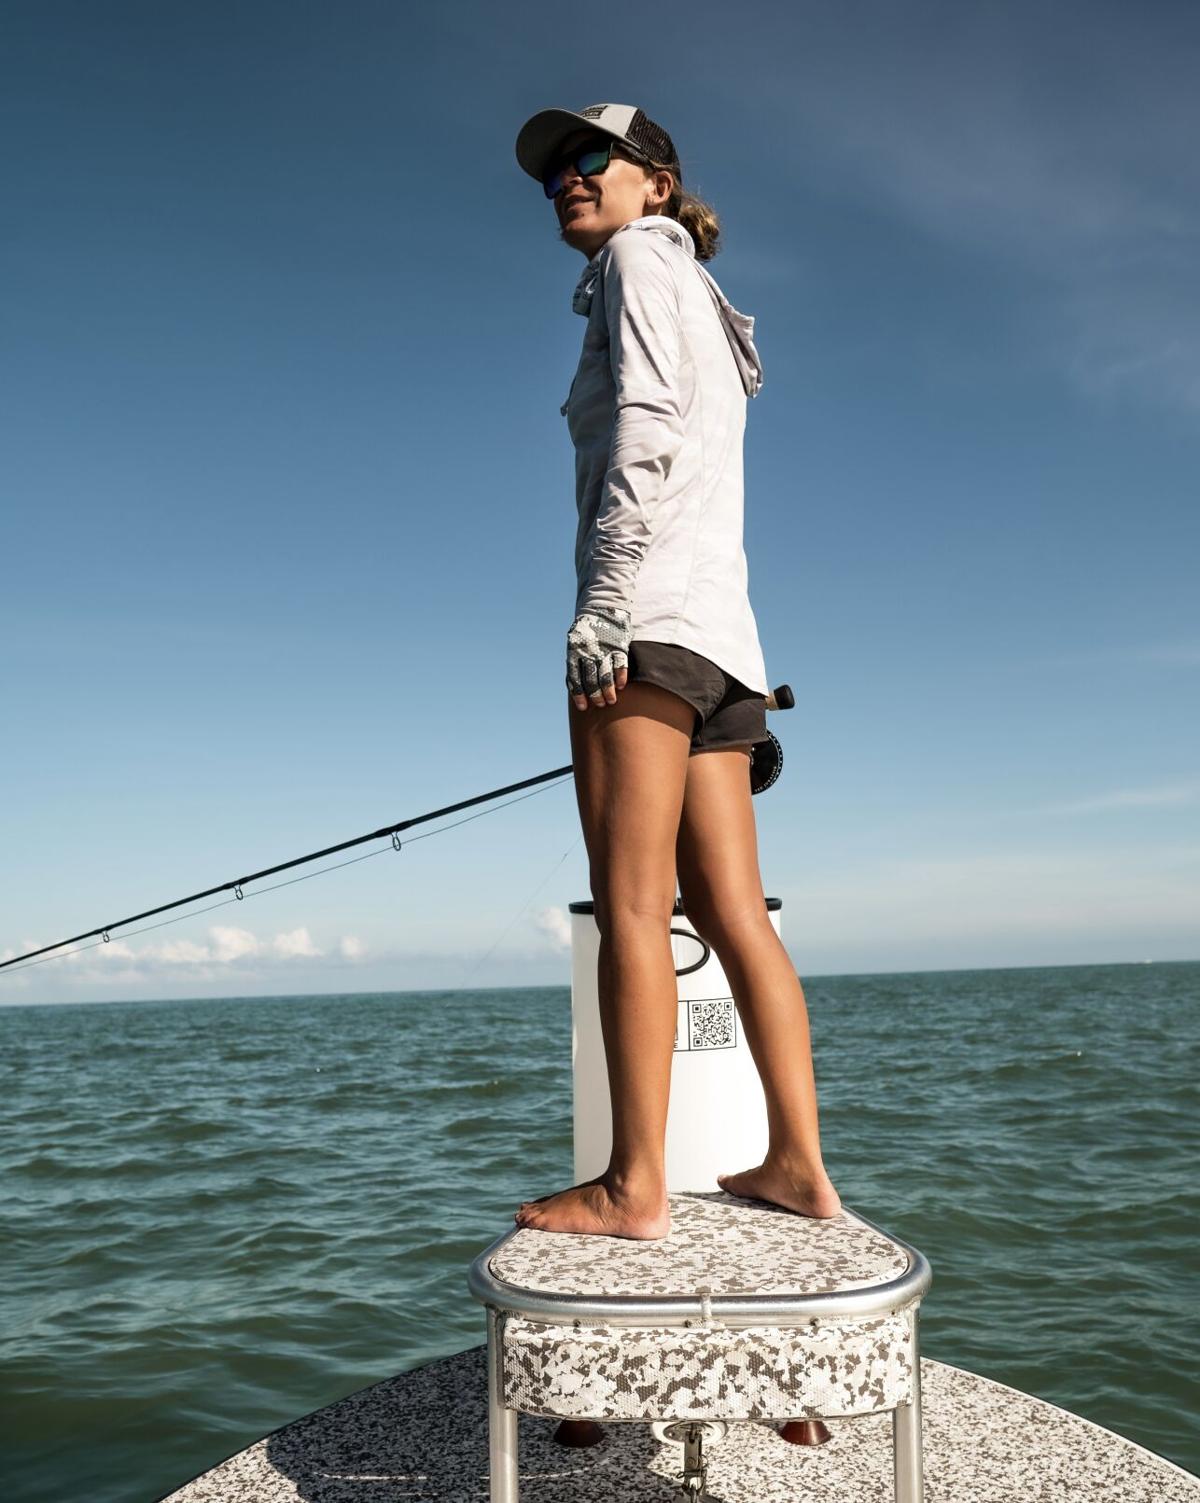 The Best Fly Fishing Setups for Beginners, InShore